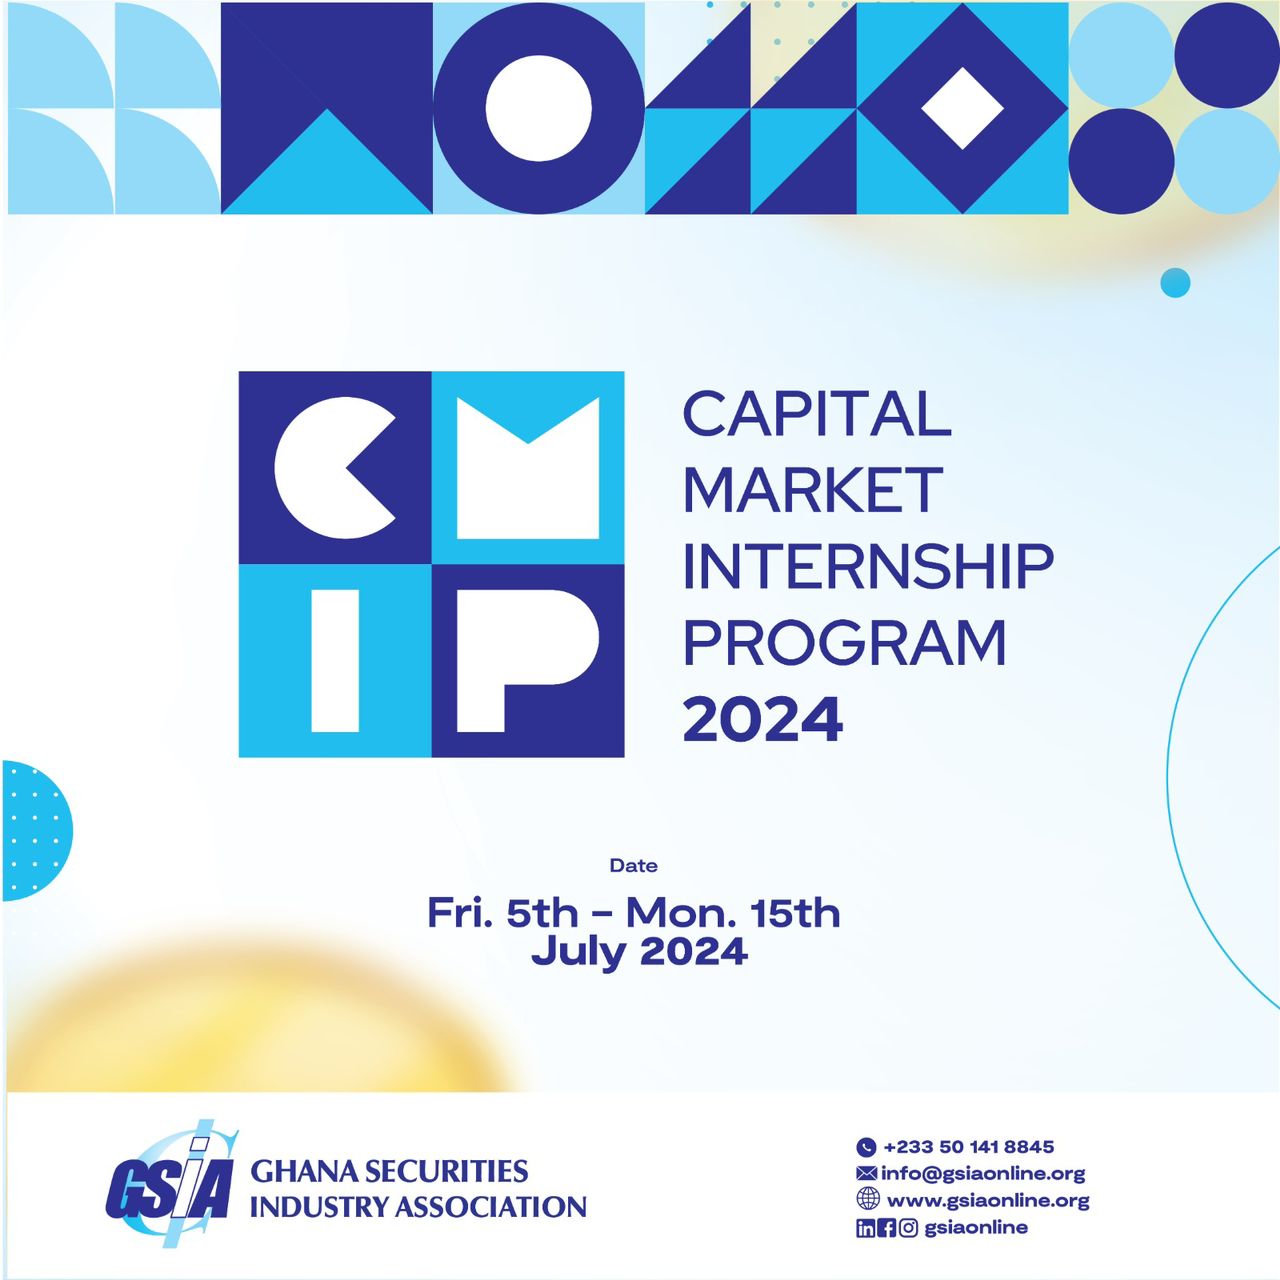 Capital Market Internship Program 2024